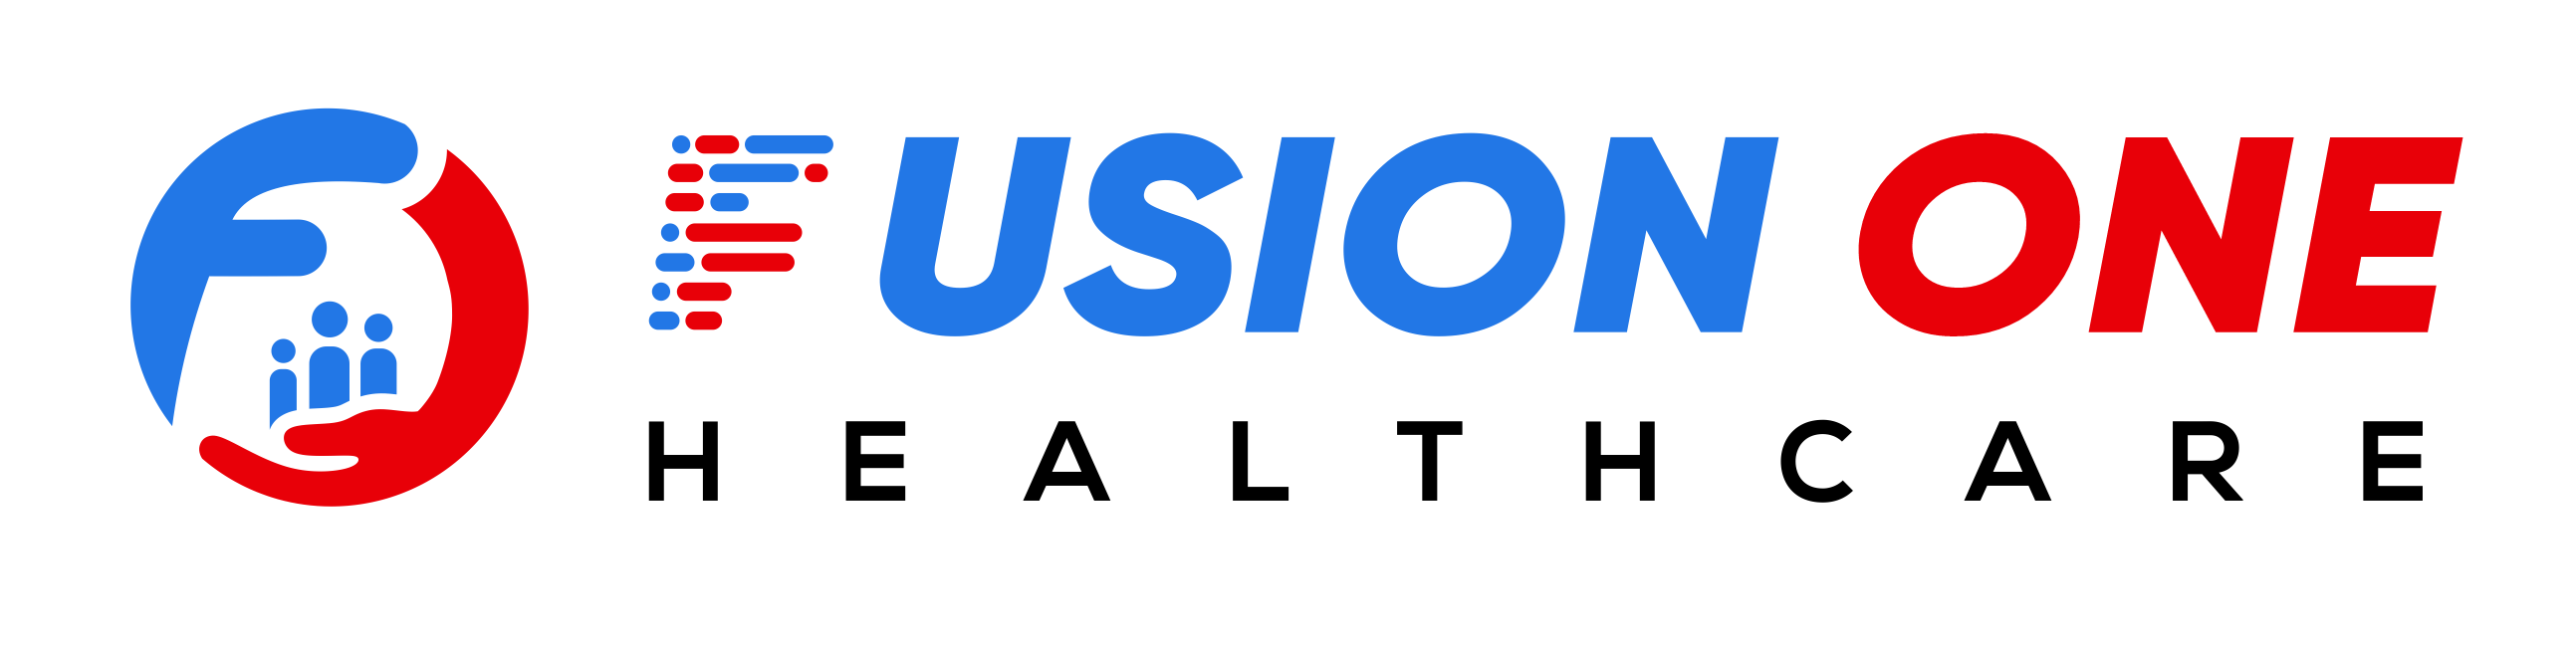 Fusion One Healthcare